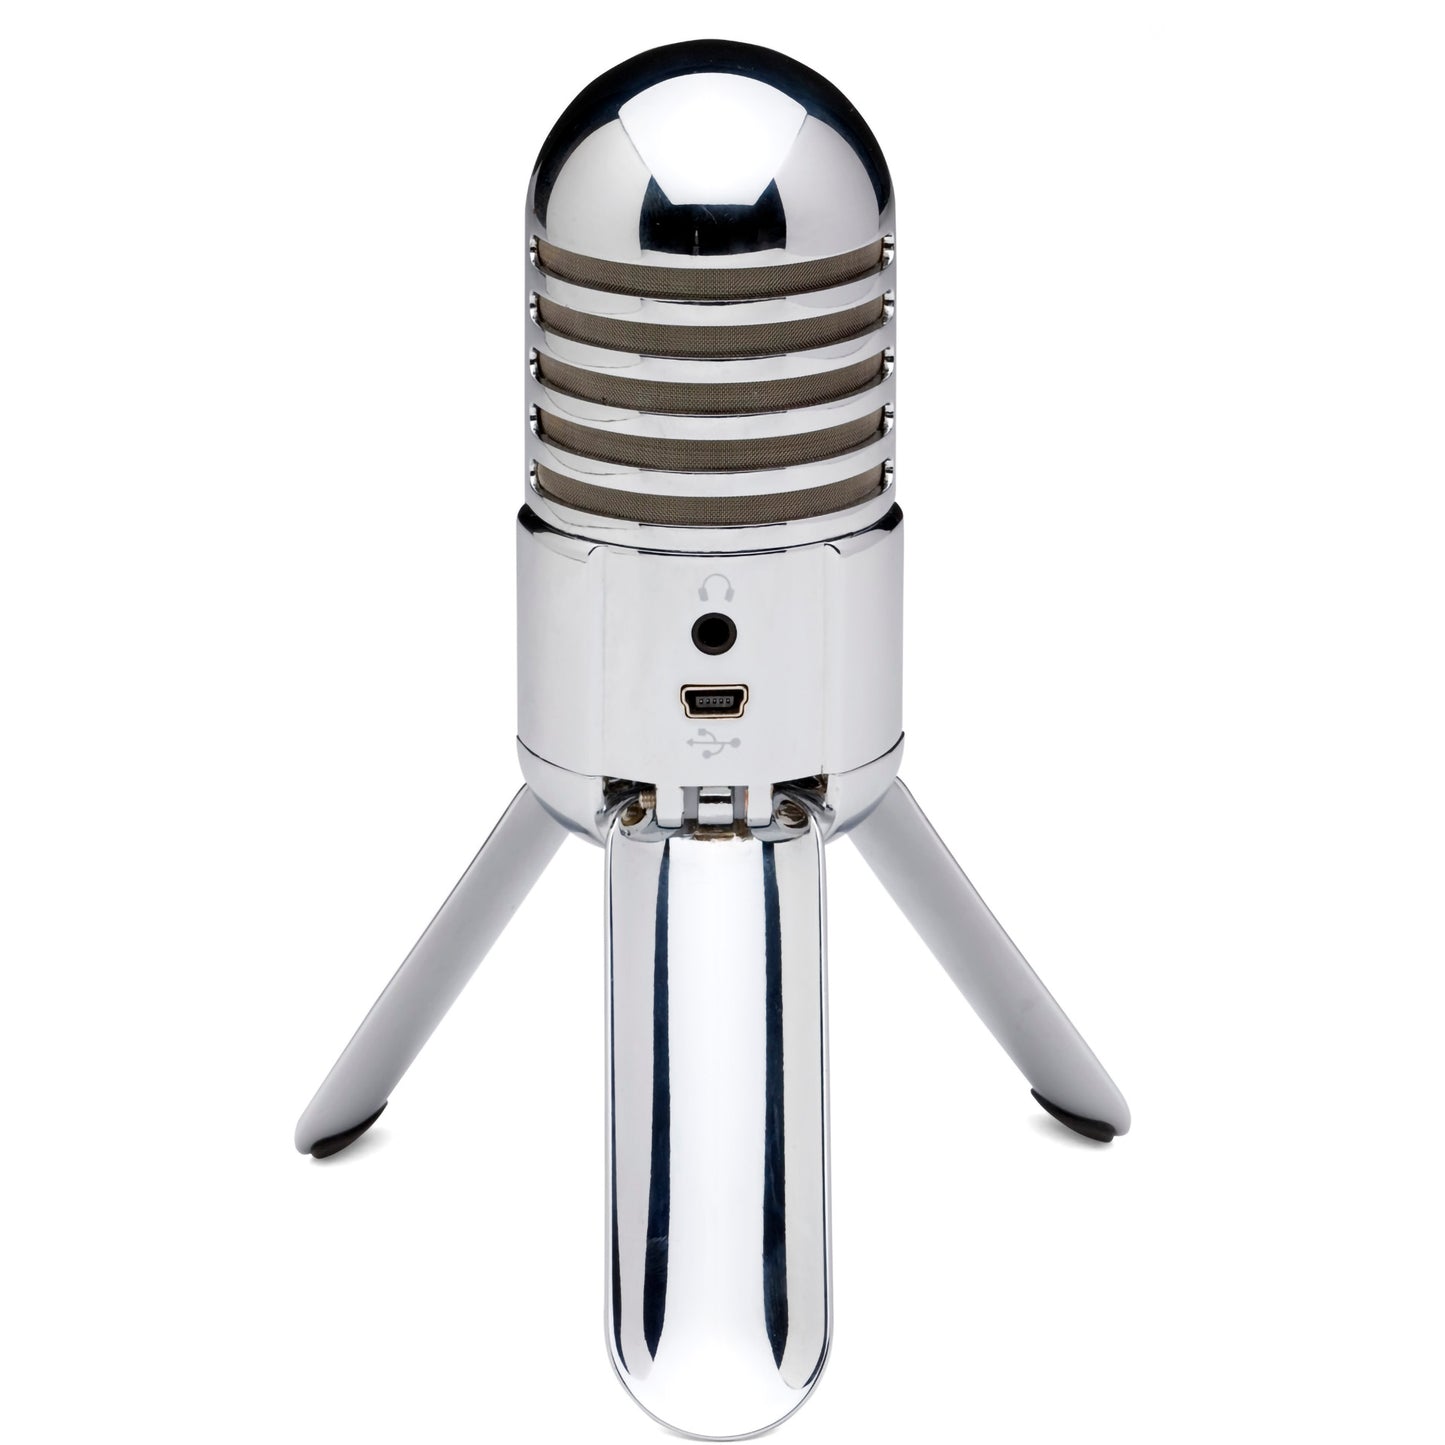 Samson Meteor USB Digital Recording Microphone